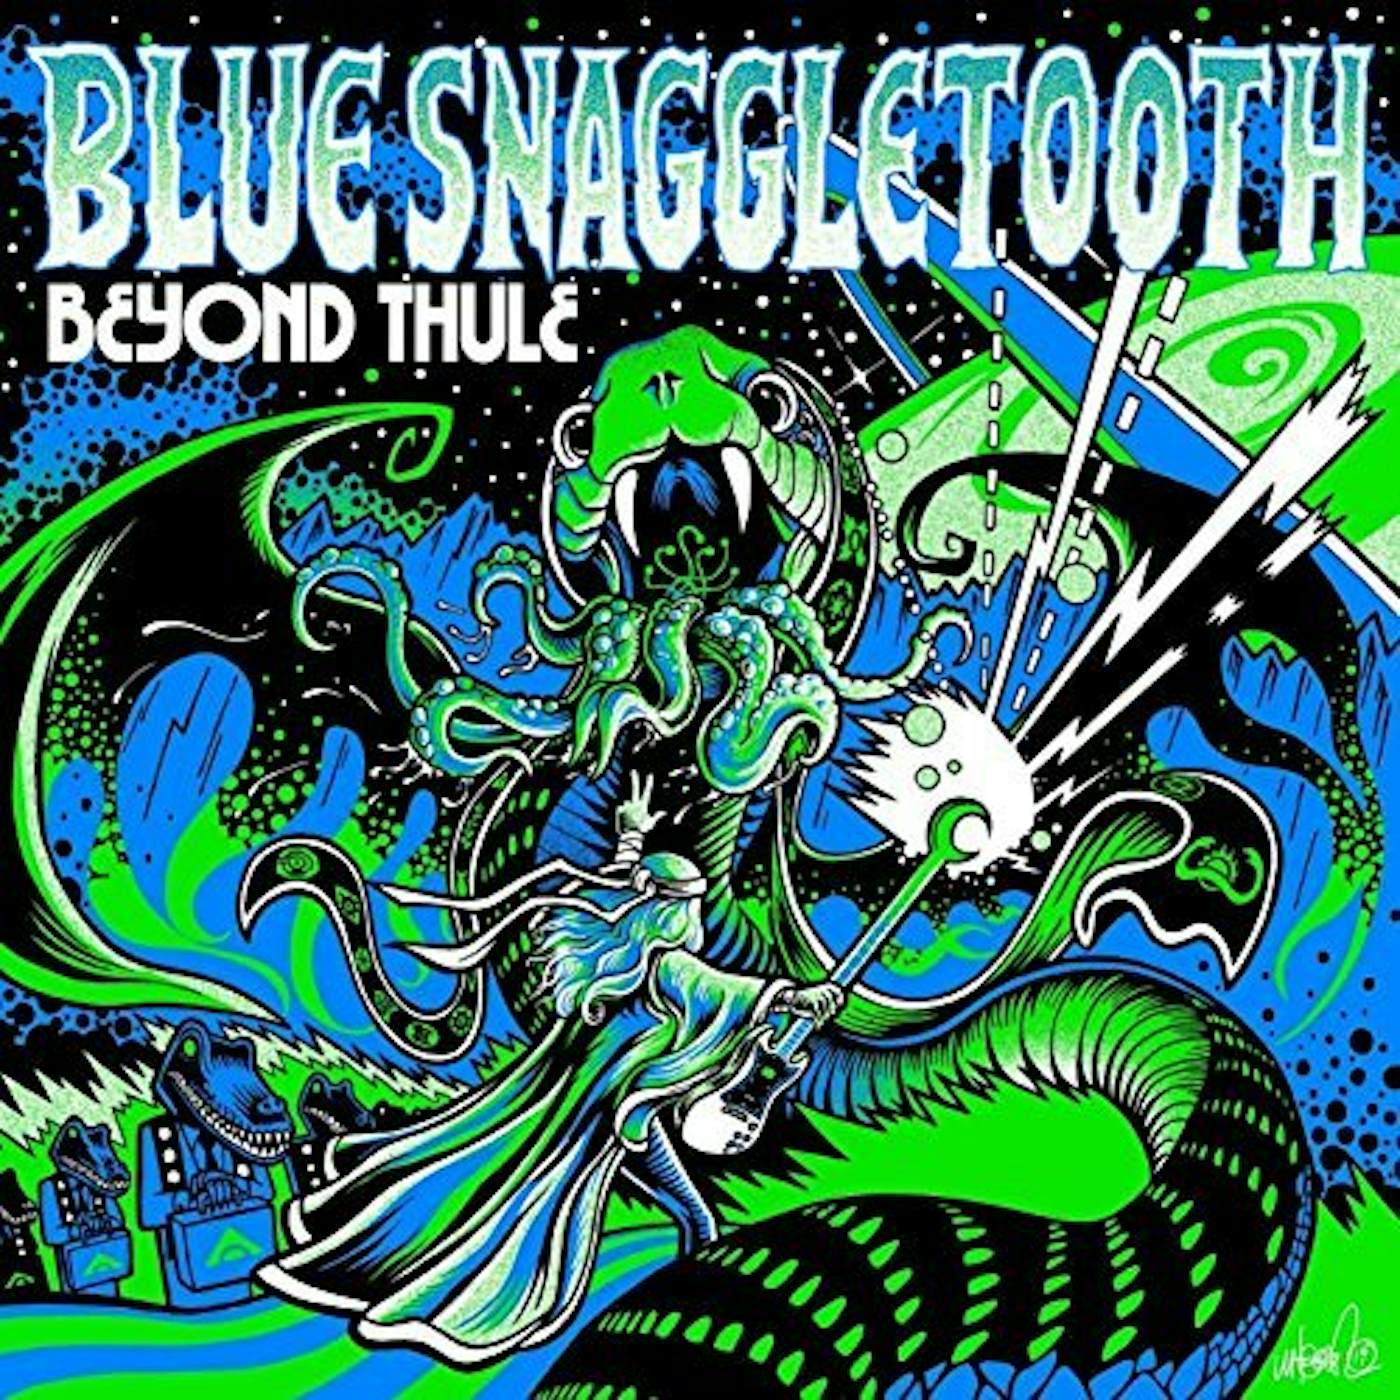 Blue Snaggletooth Beyond Thule Vinyl Record